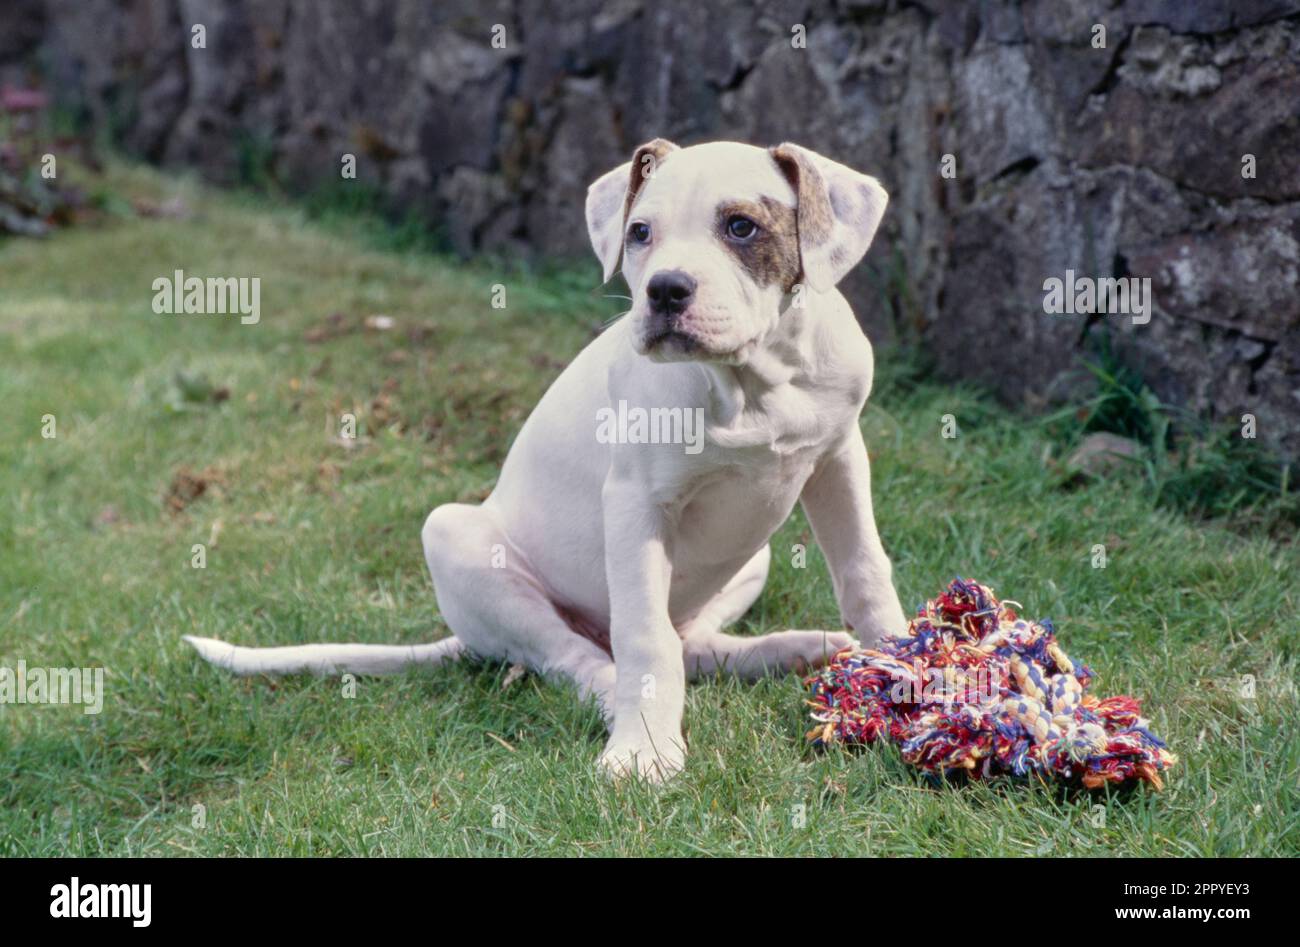 American Bulldog puppy in grass Stock Photo